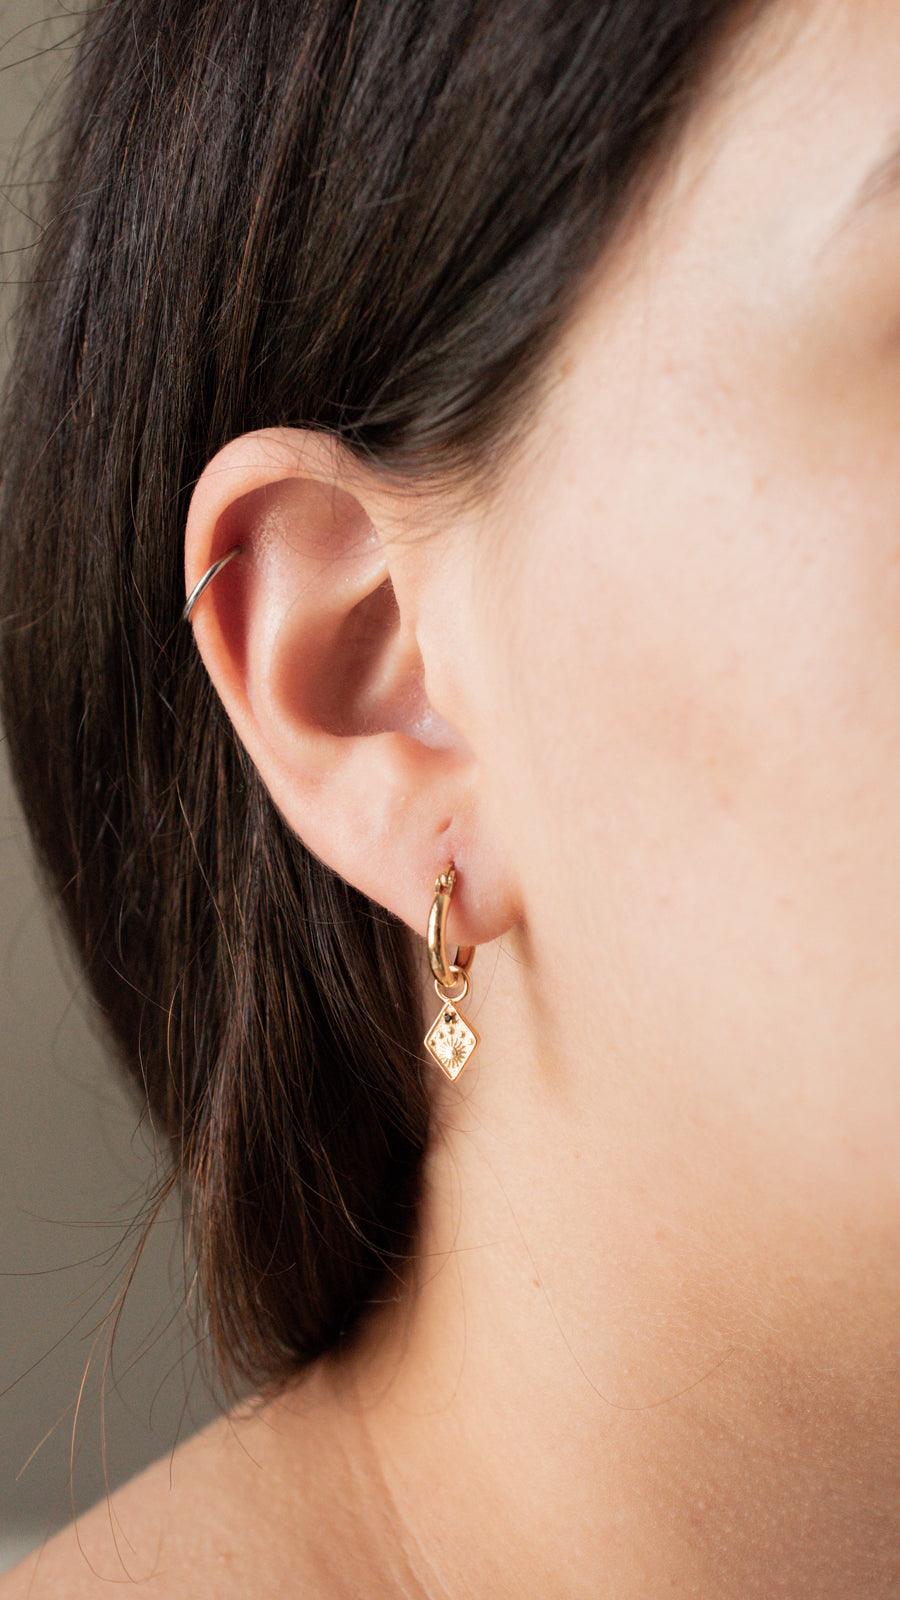 sun earrings display gold-plate hoop earrings with dainty sun charms